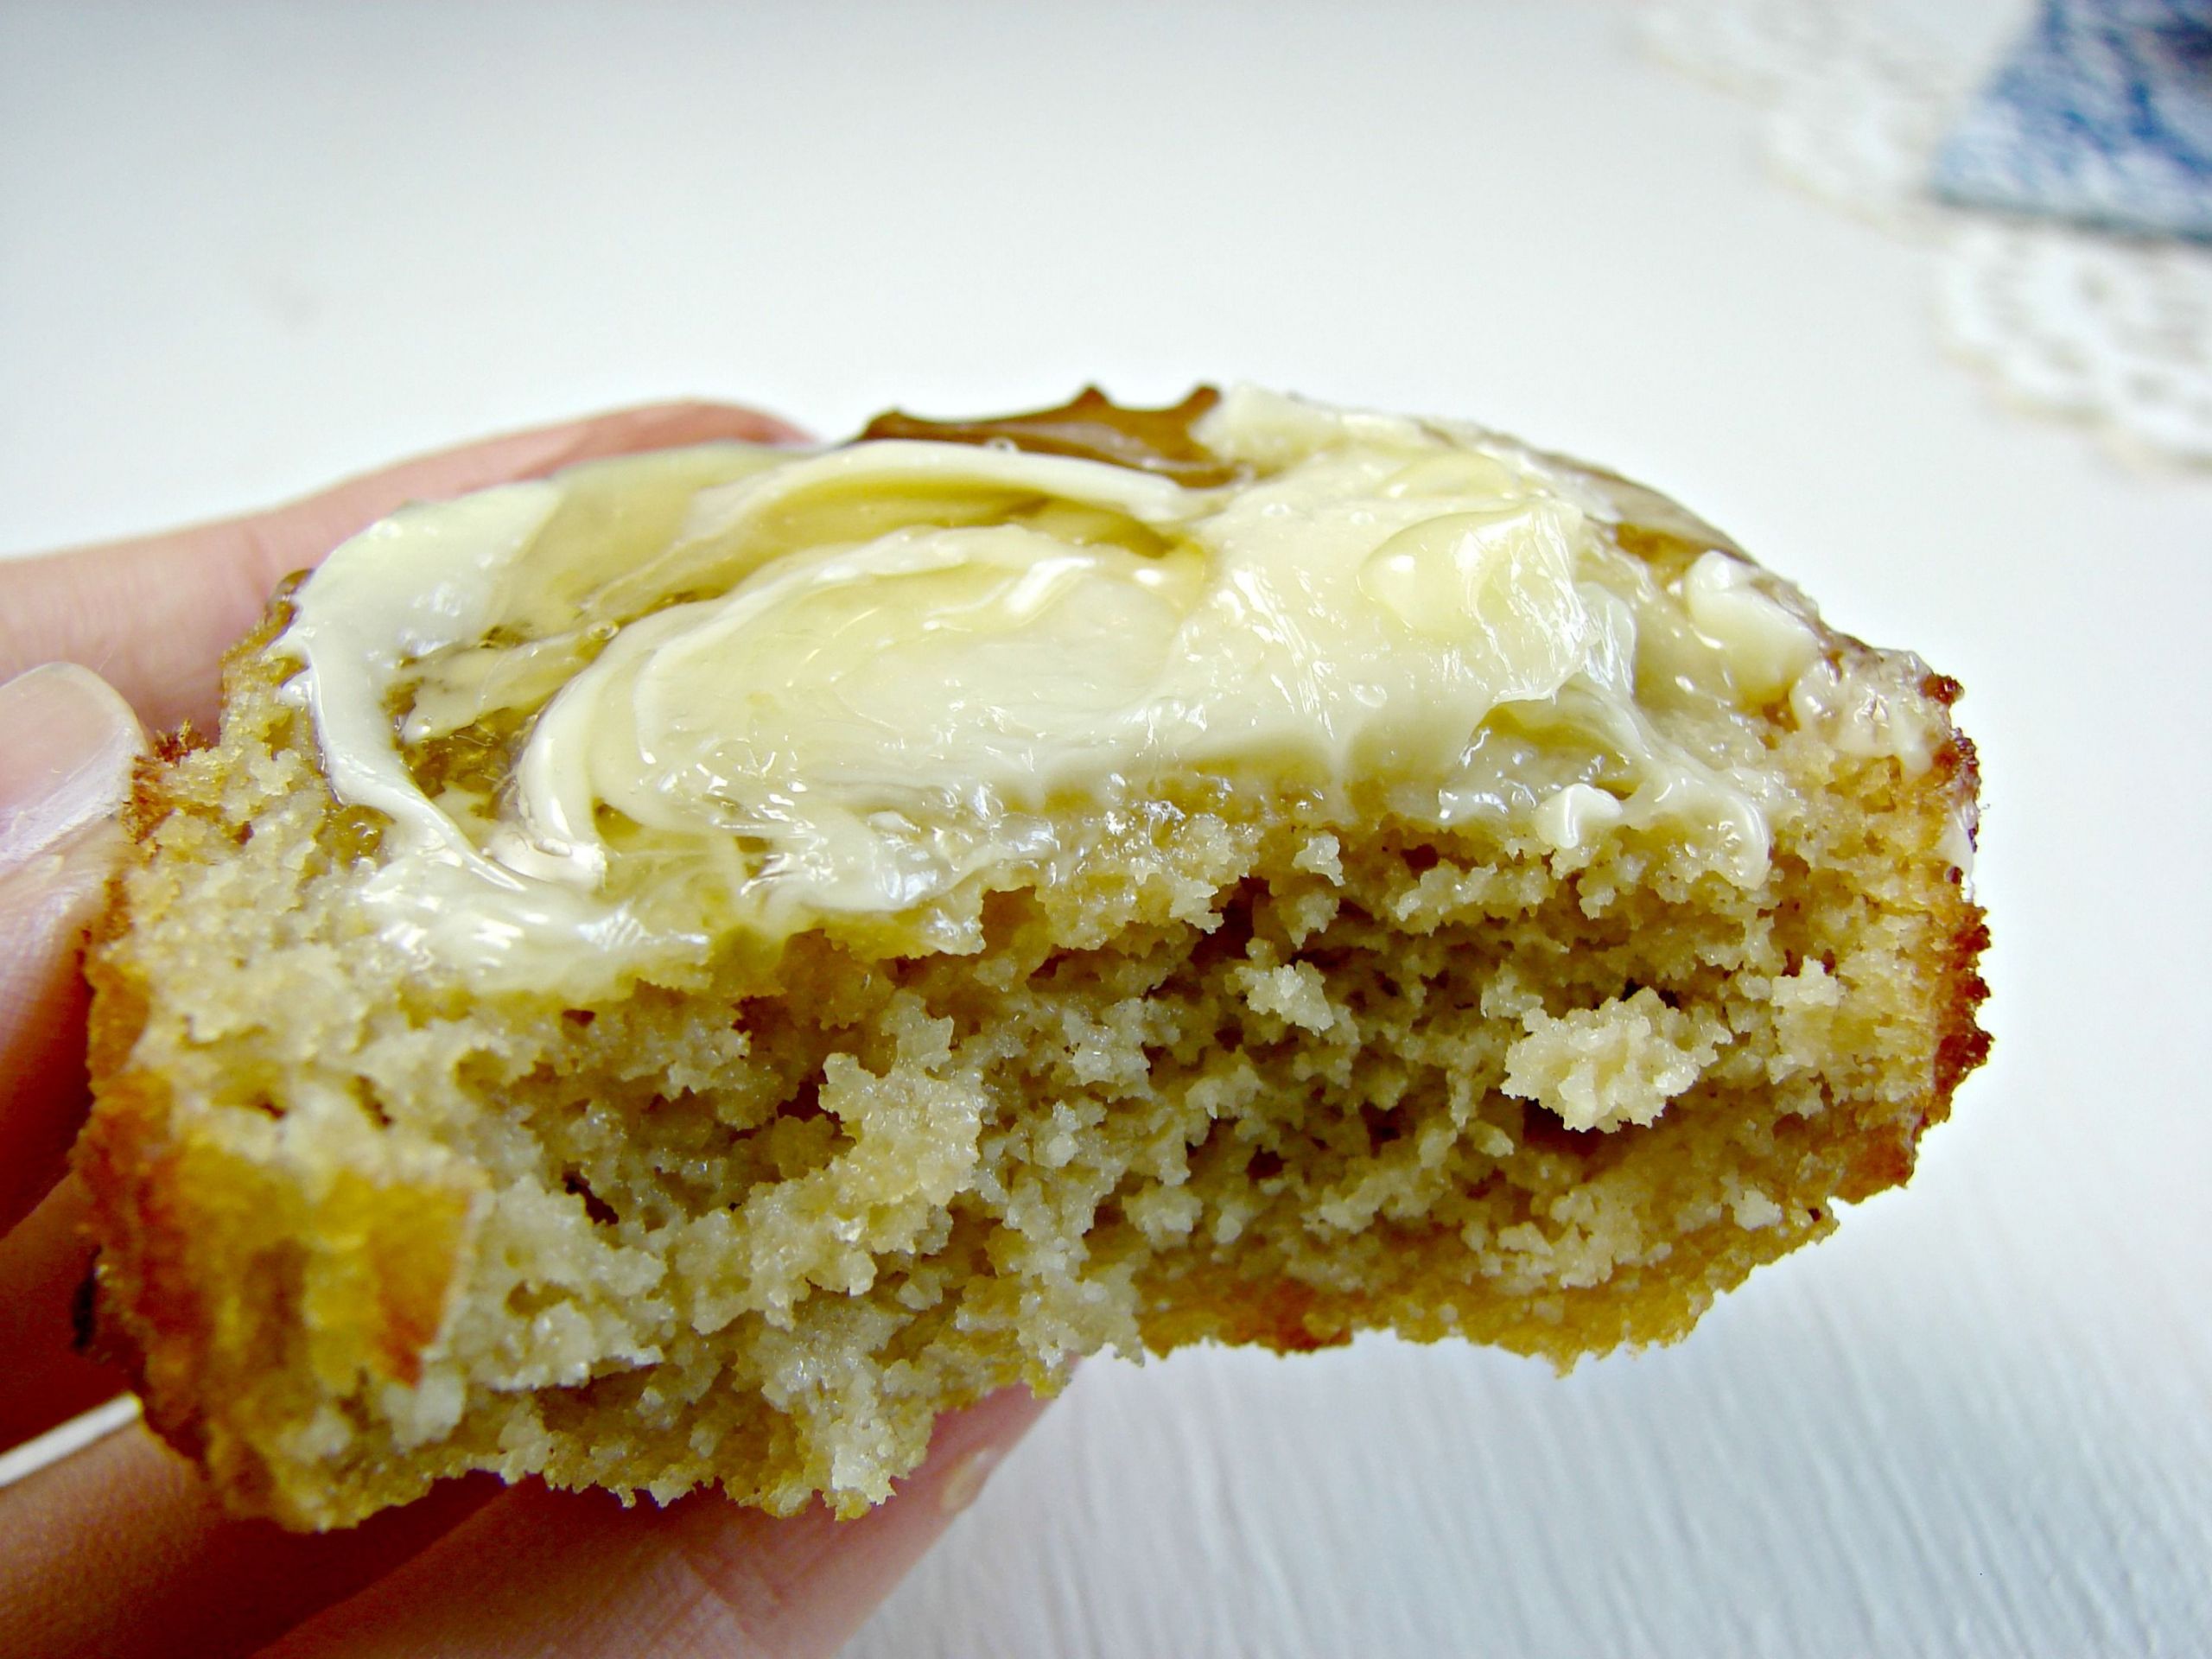 Paleo Cornbread Muffins
 Paleo Cornbread Muffins Recipe